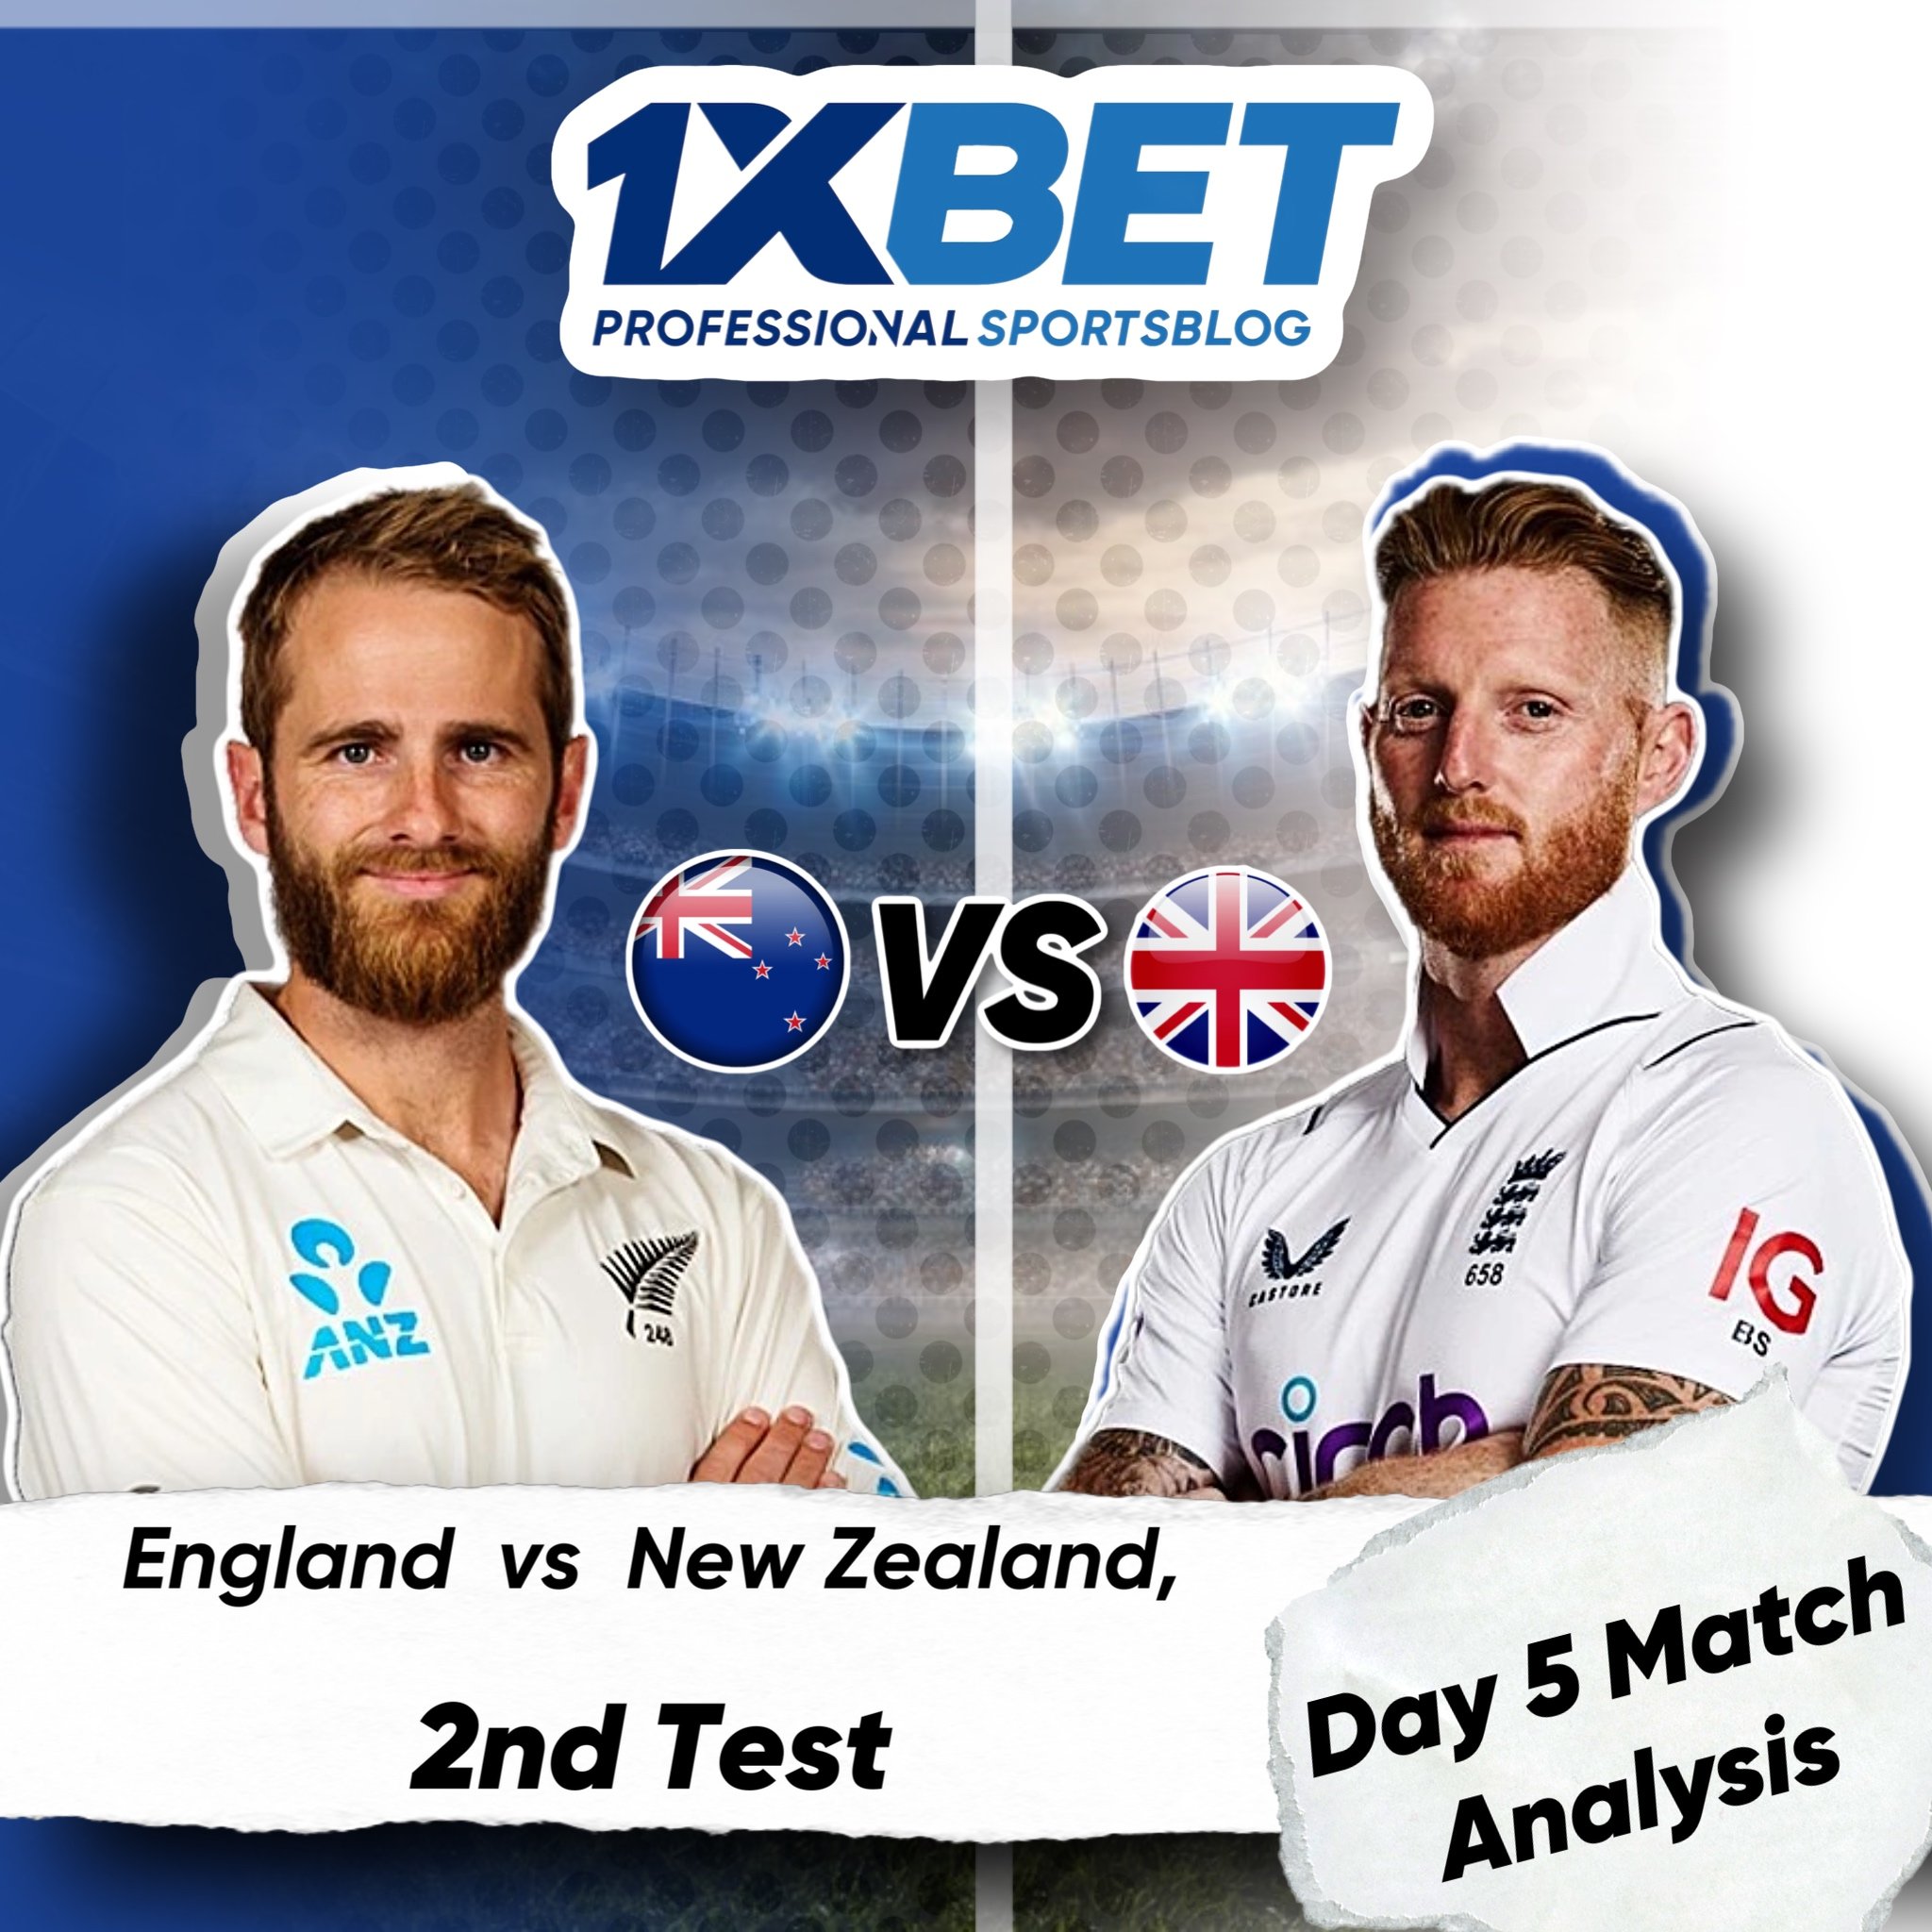 England vs New Zealand, 2nd Test, Day 5 Match Analysis